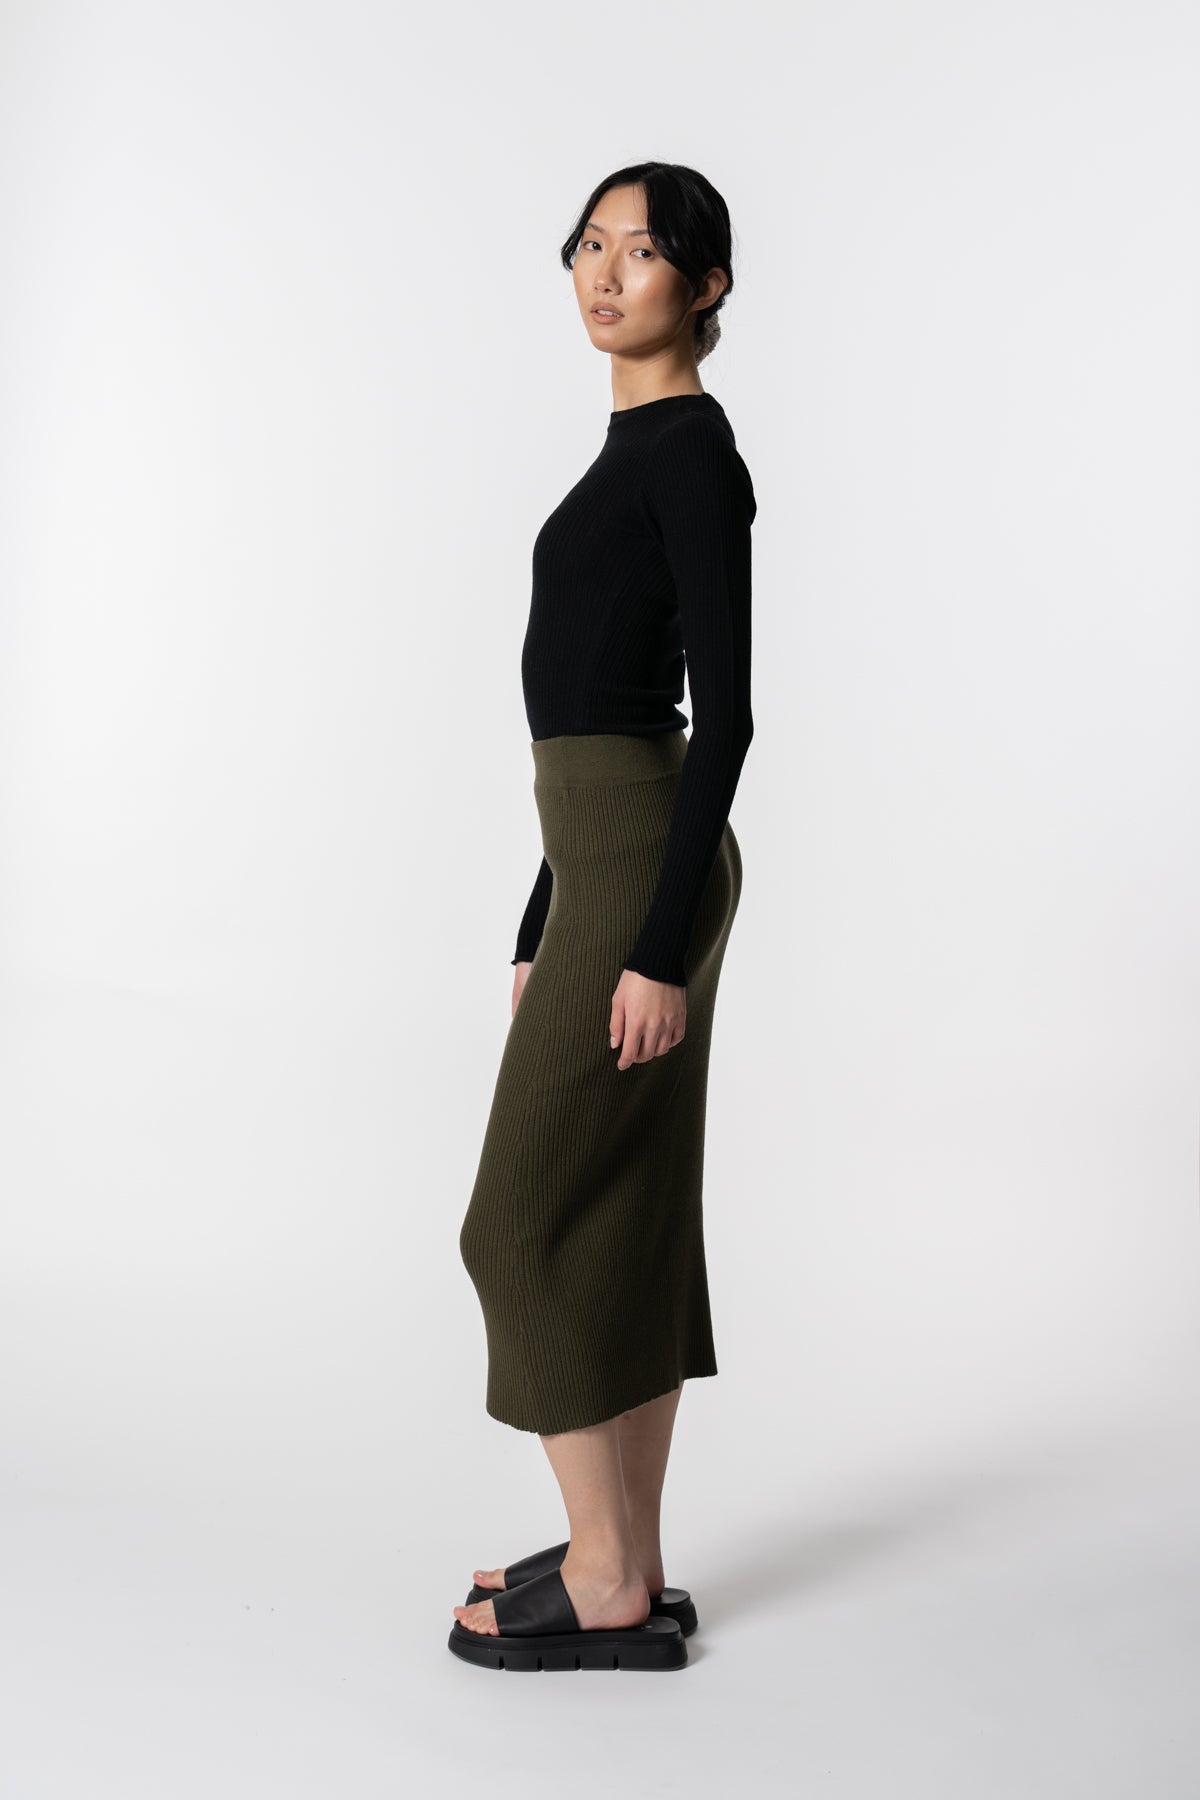 Merino Rib Skirt In Olive Green